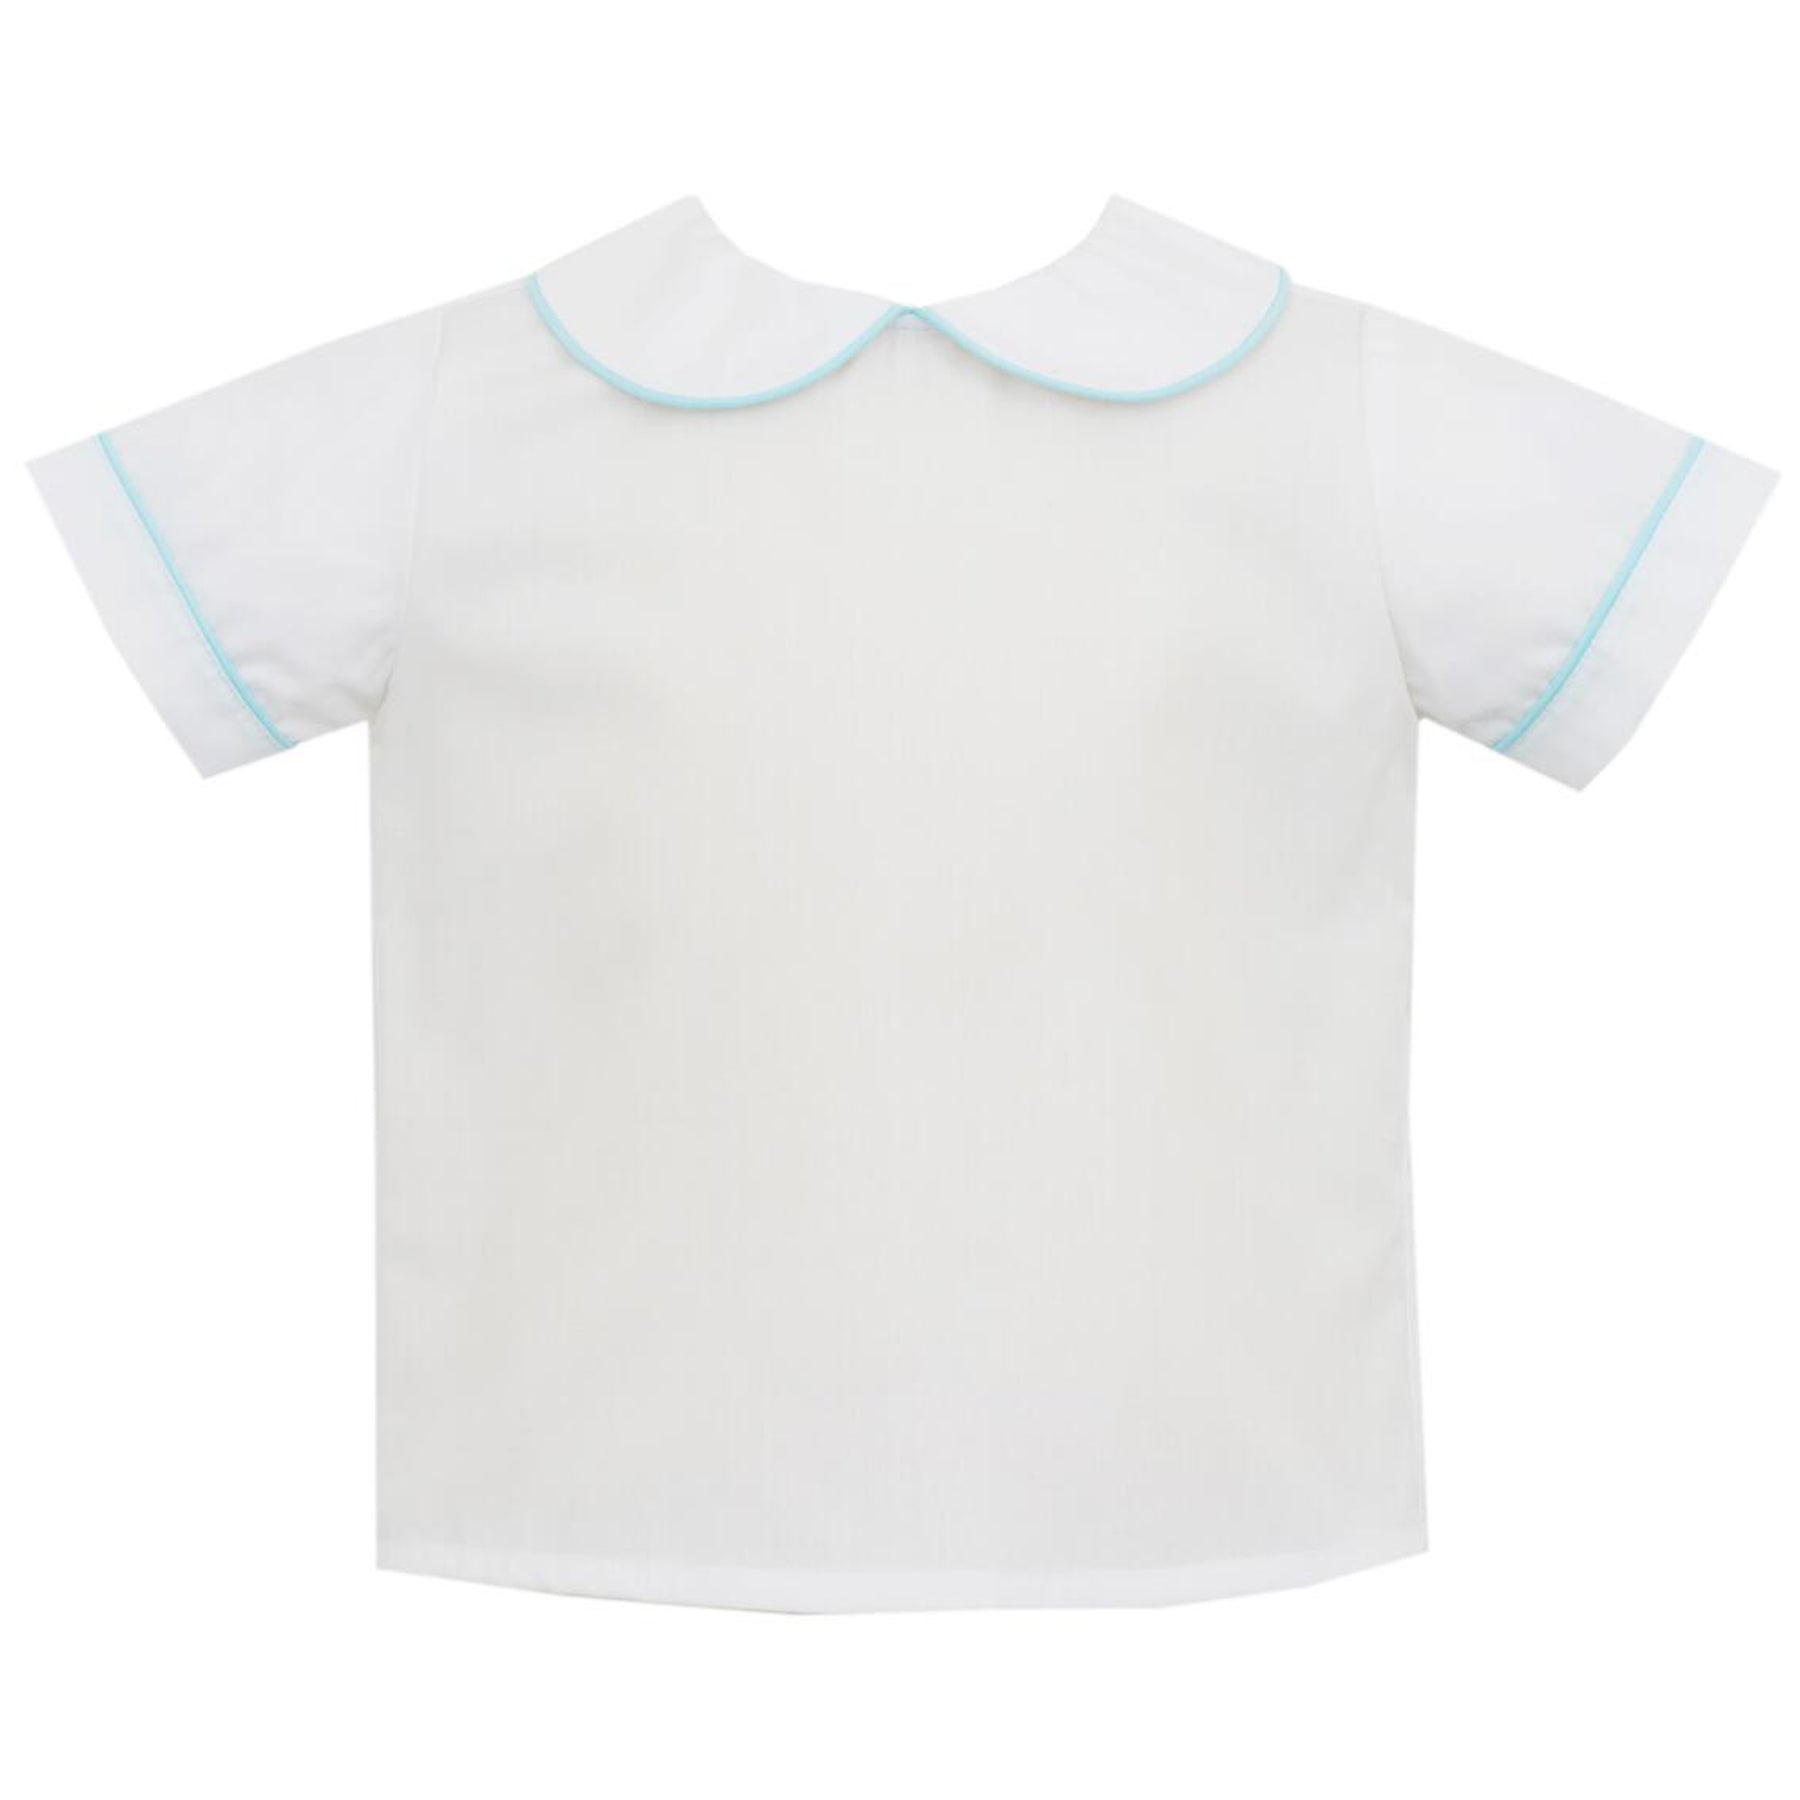 Cottontails White Shirt w/ Aqua Piping